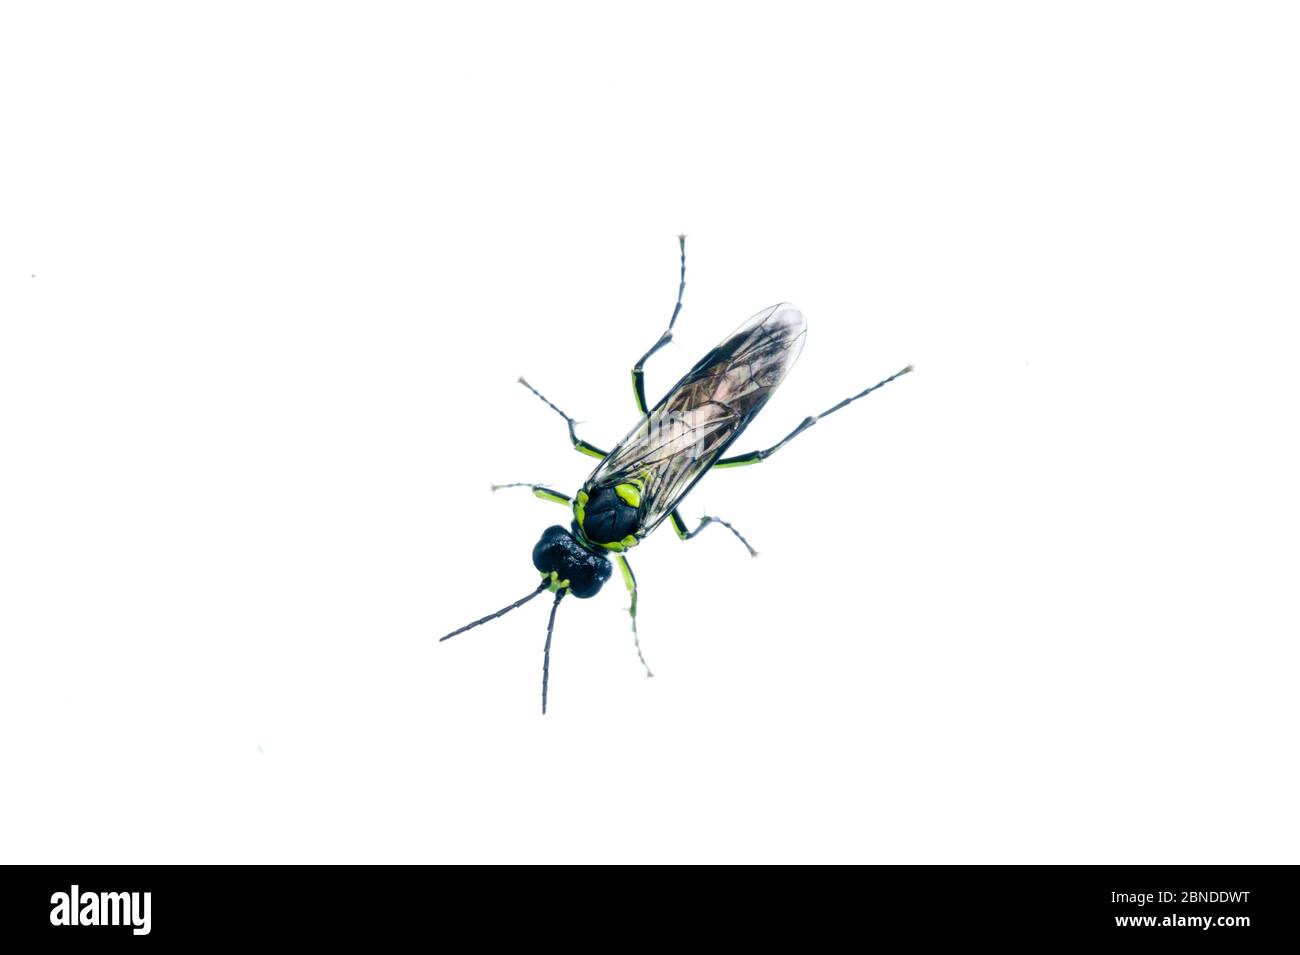 Sawfly (Tenthredo mesomelas) Scotland, UK, June. Meetyourneighbours.net project Stock Photo